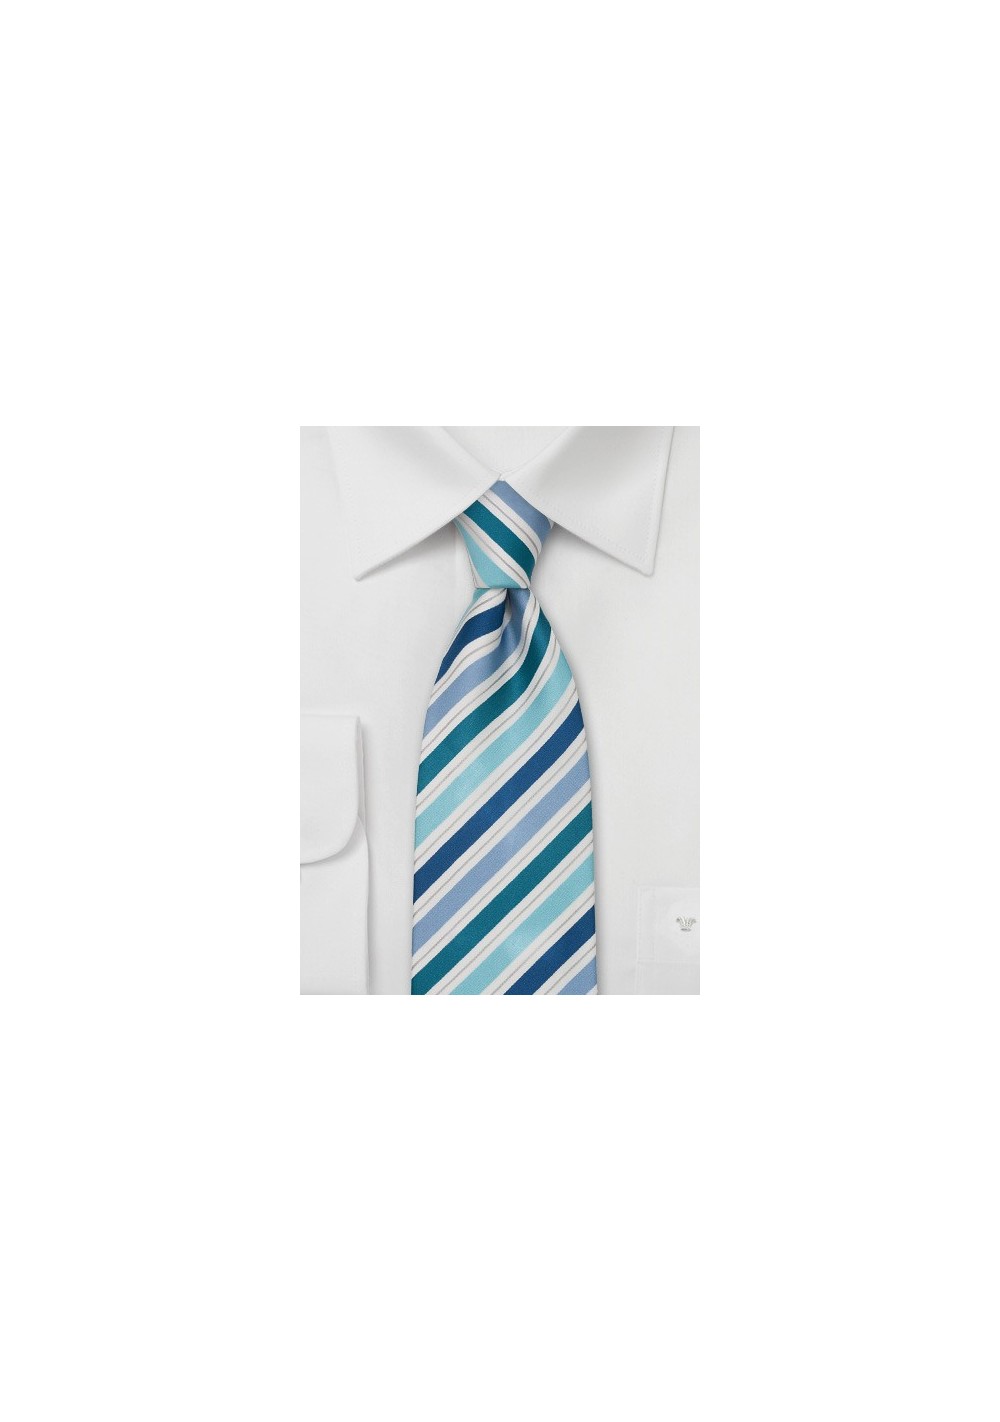 Striped Silk Tie in Teal, Aqua, and Blue